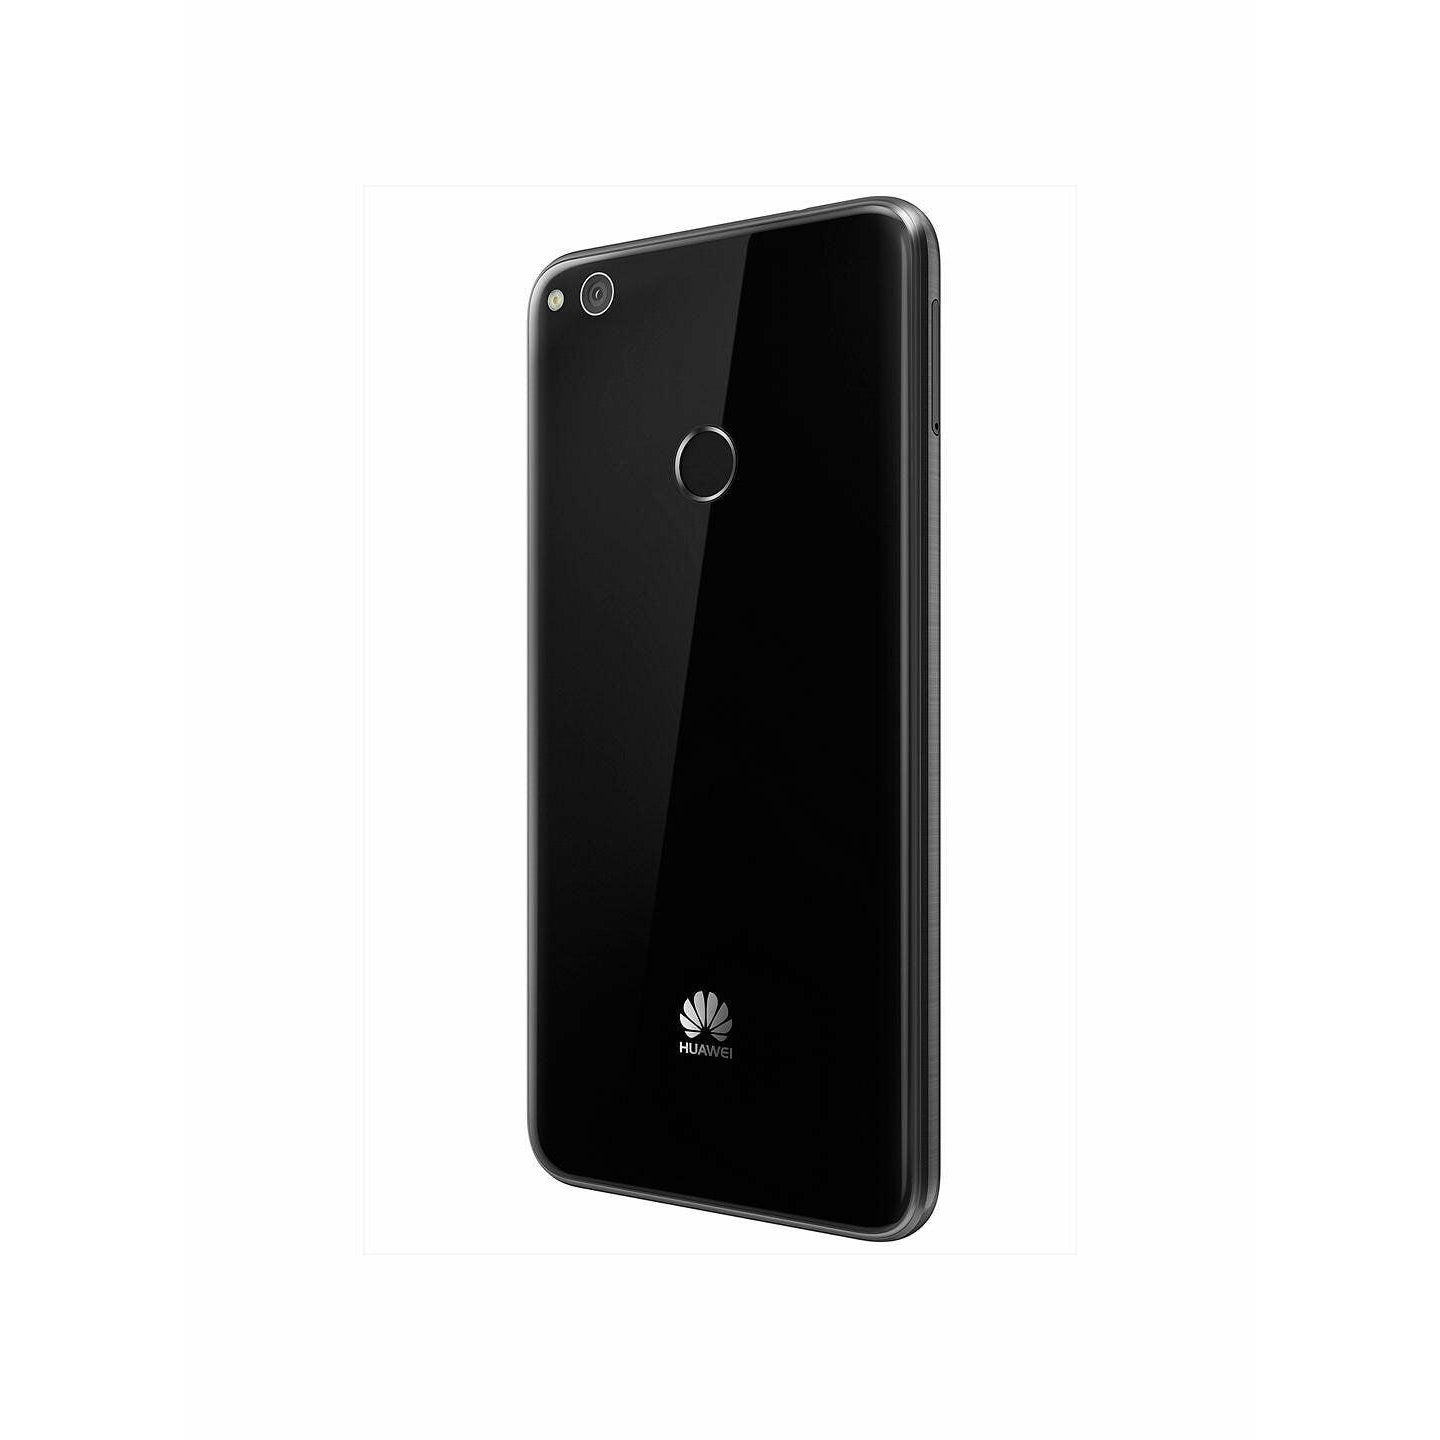 Huawei P8 Lite, Android, 5.2”, 4G LTE, SIM Free, 32GB, Black/Blue (Refurbished)